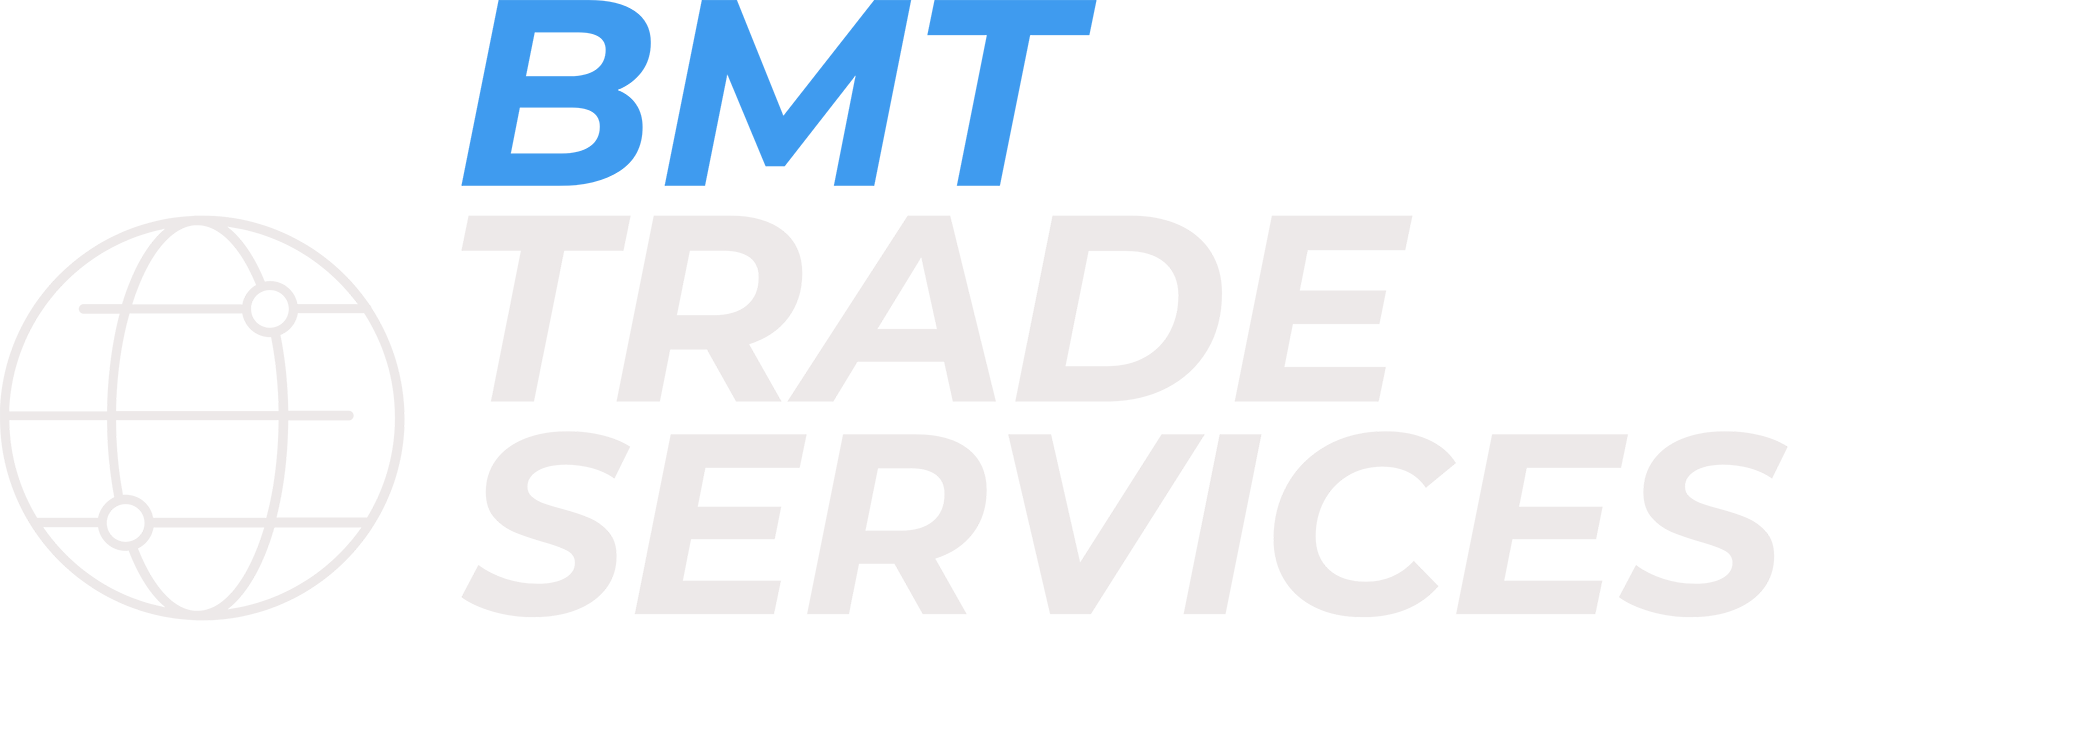 BMT Trade Services